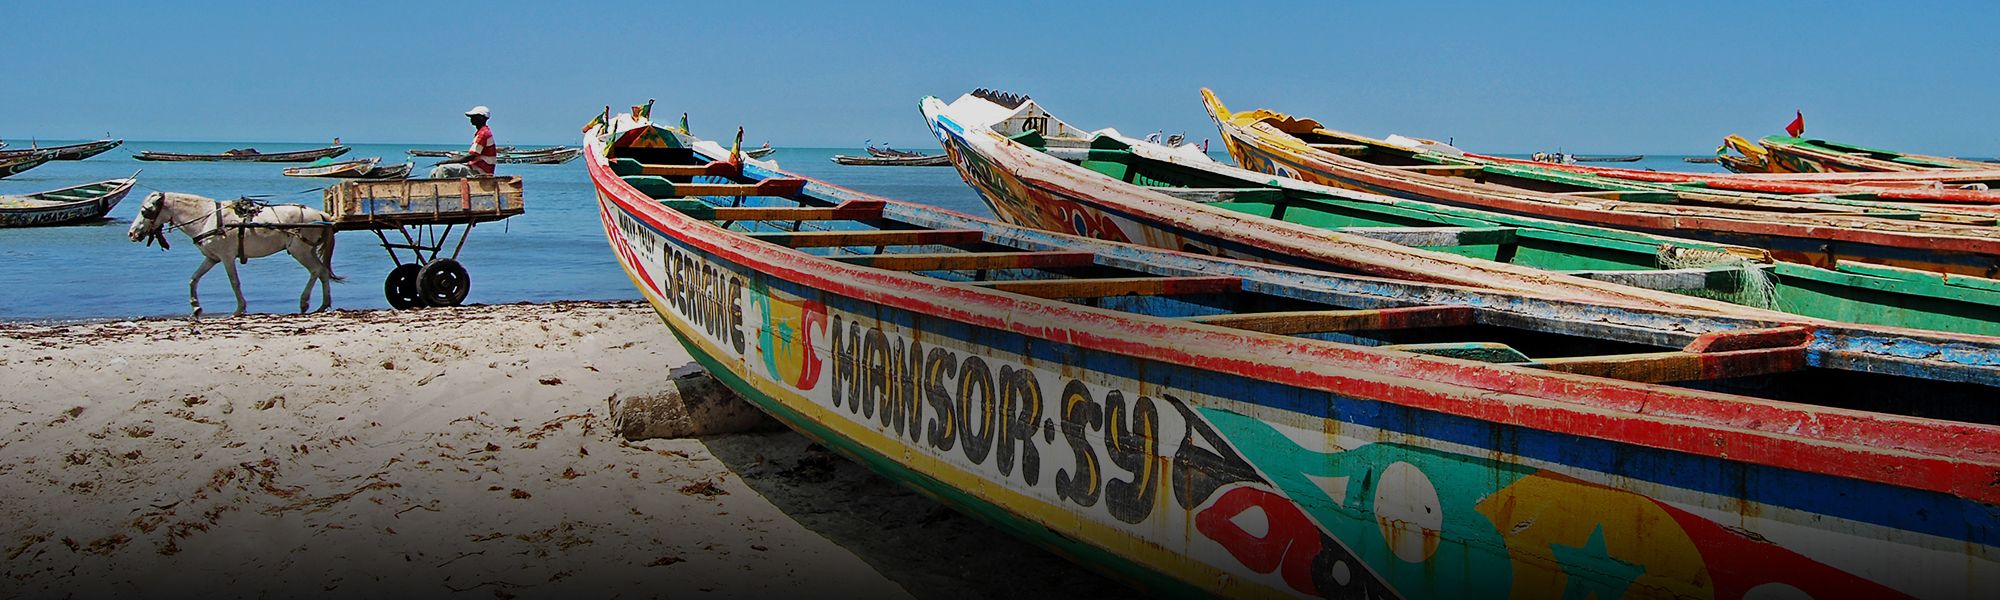 Voyage Sénégal © Djekker / Adobe Stock